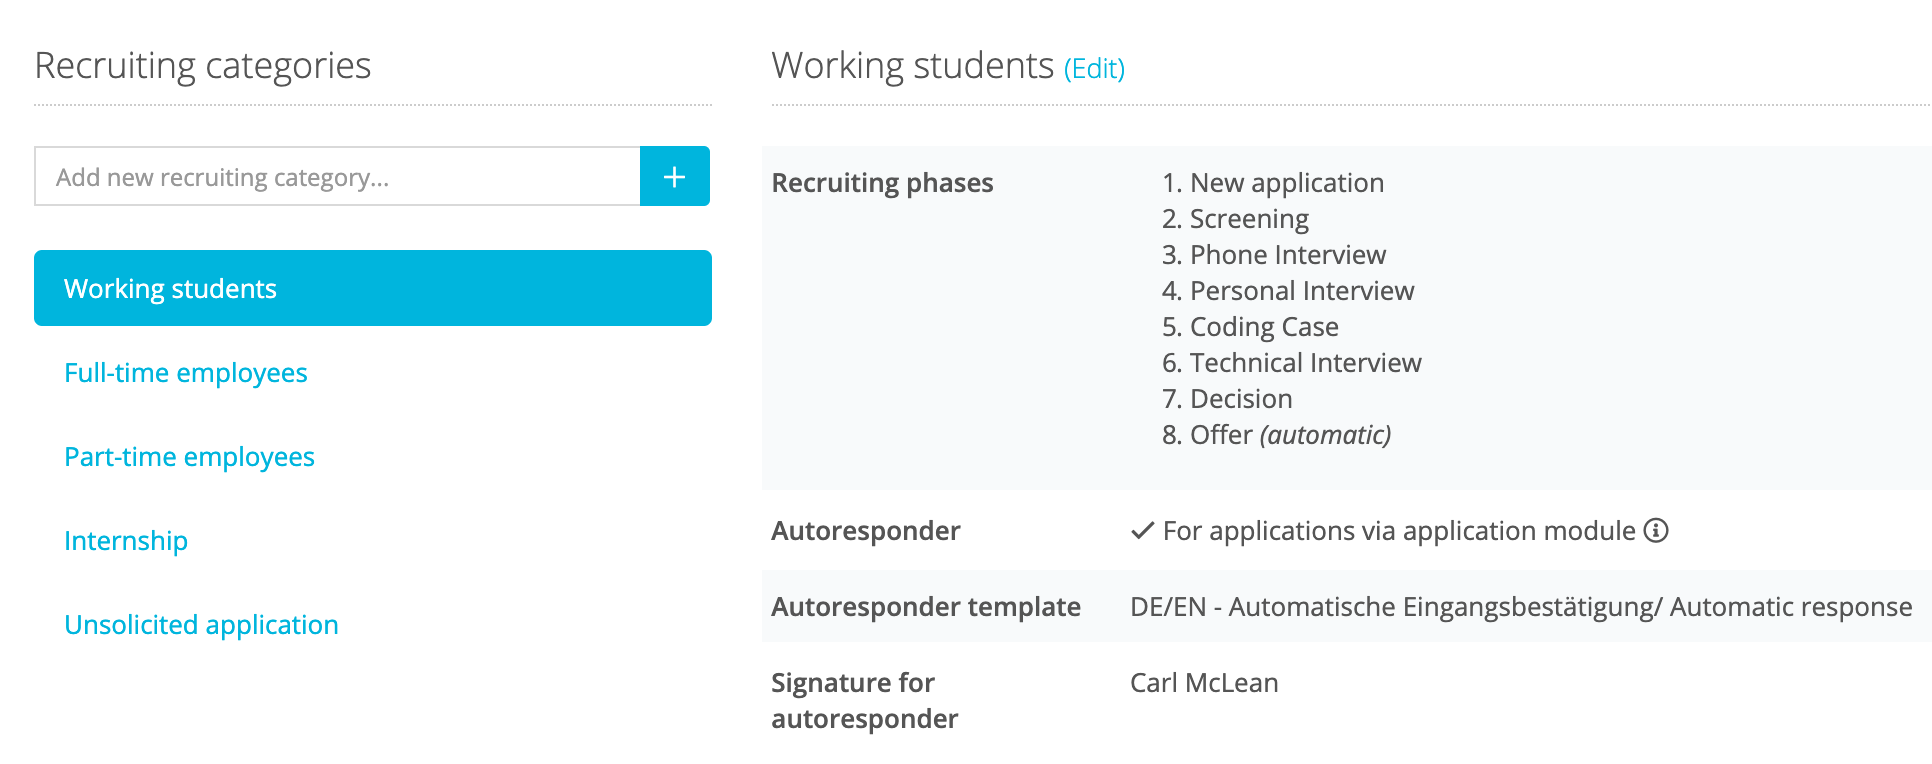 recruiting-categories-job-types_nl.png